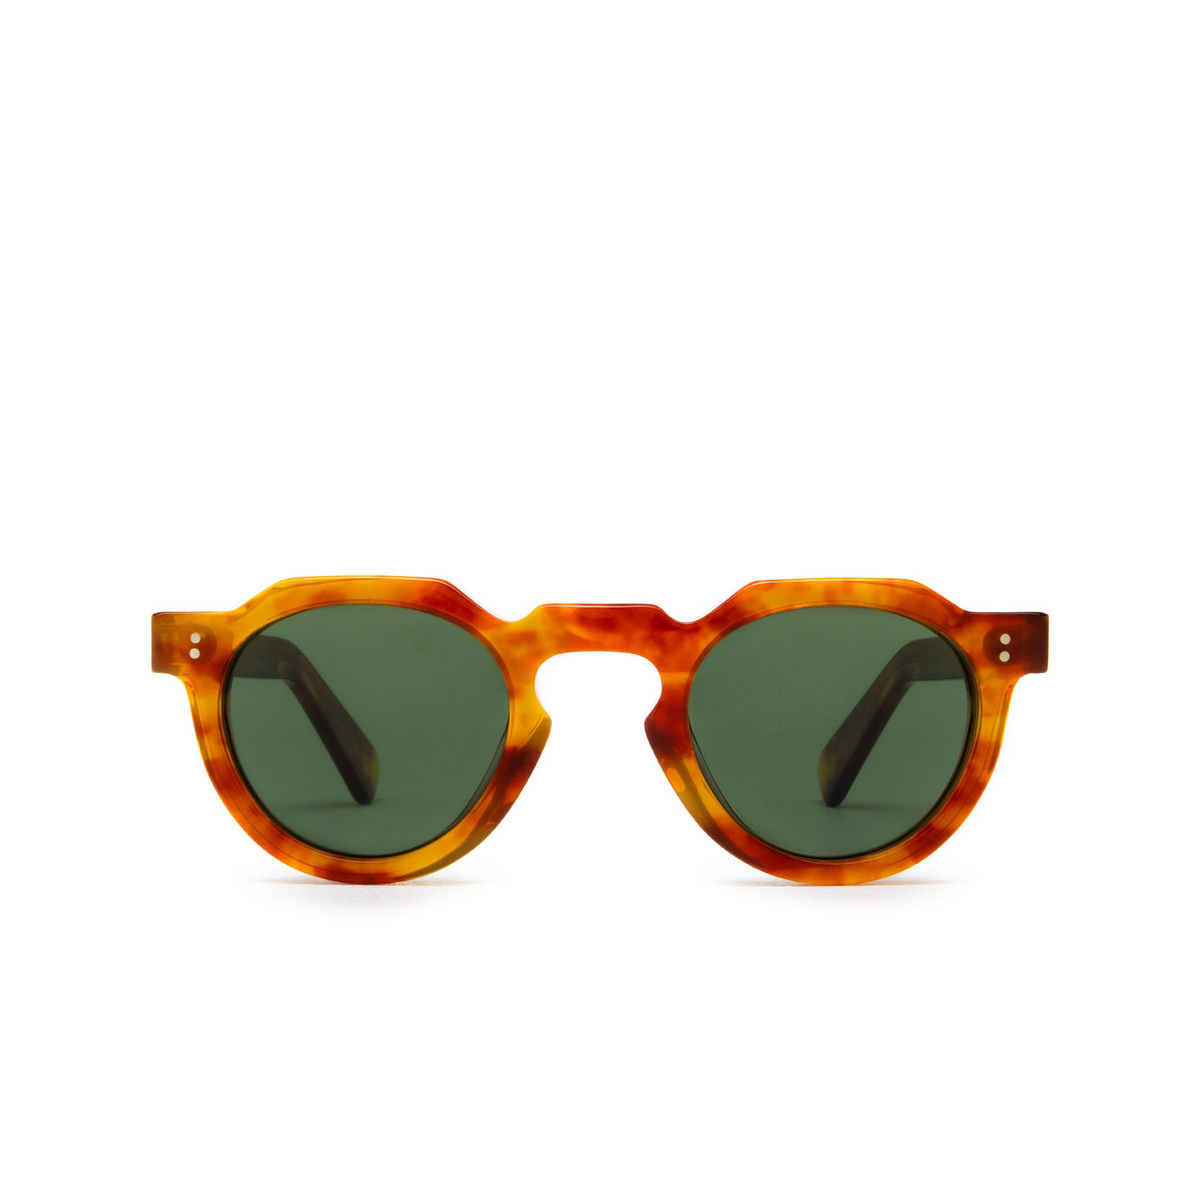 Lesca CROWN PANTO 8MM Sunglasses 23 Light Speckled Tortoise - front view